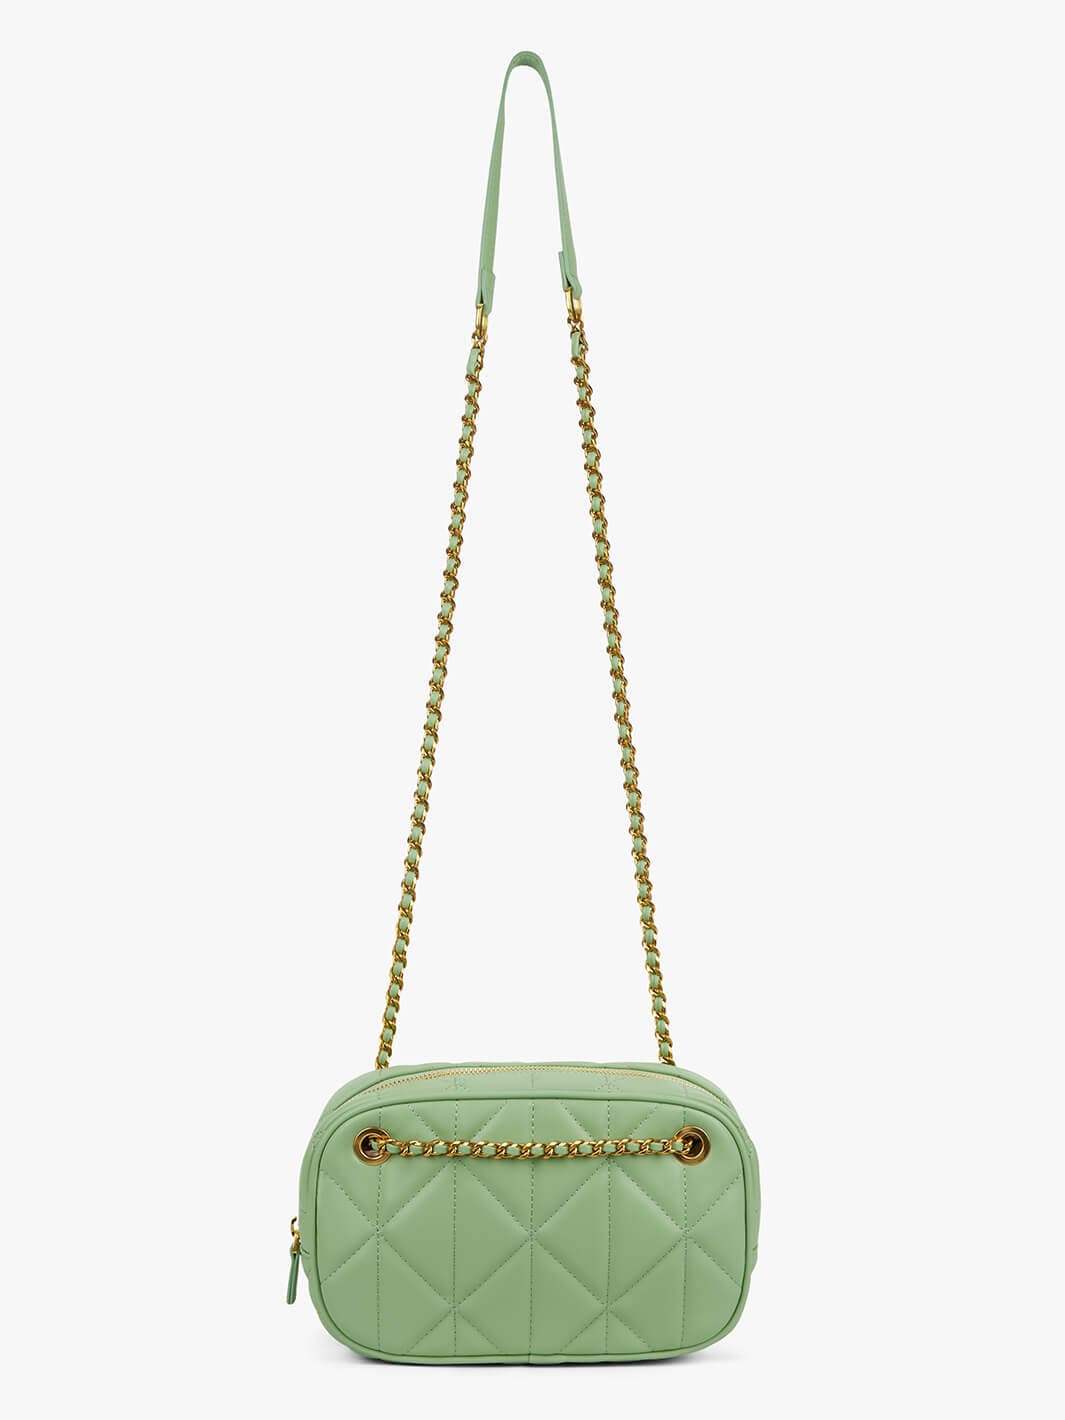 Chanel Vintage Green Quilted Leather Briefcase Shoulder Bag - Chanel